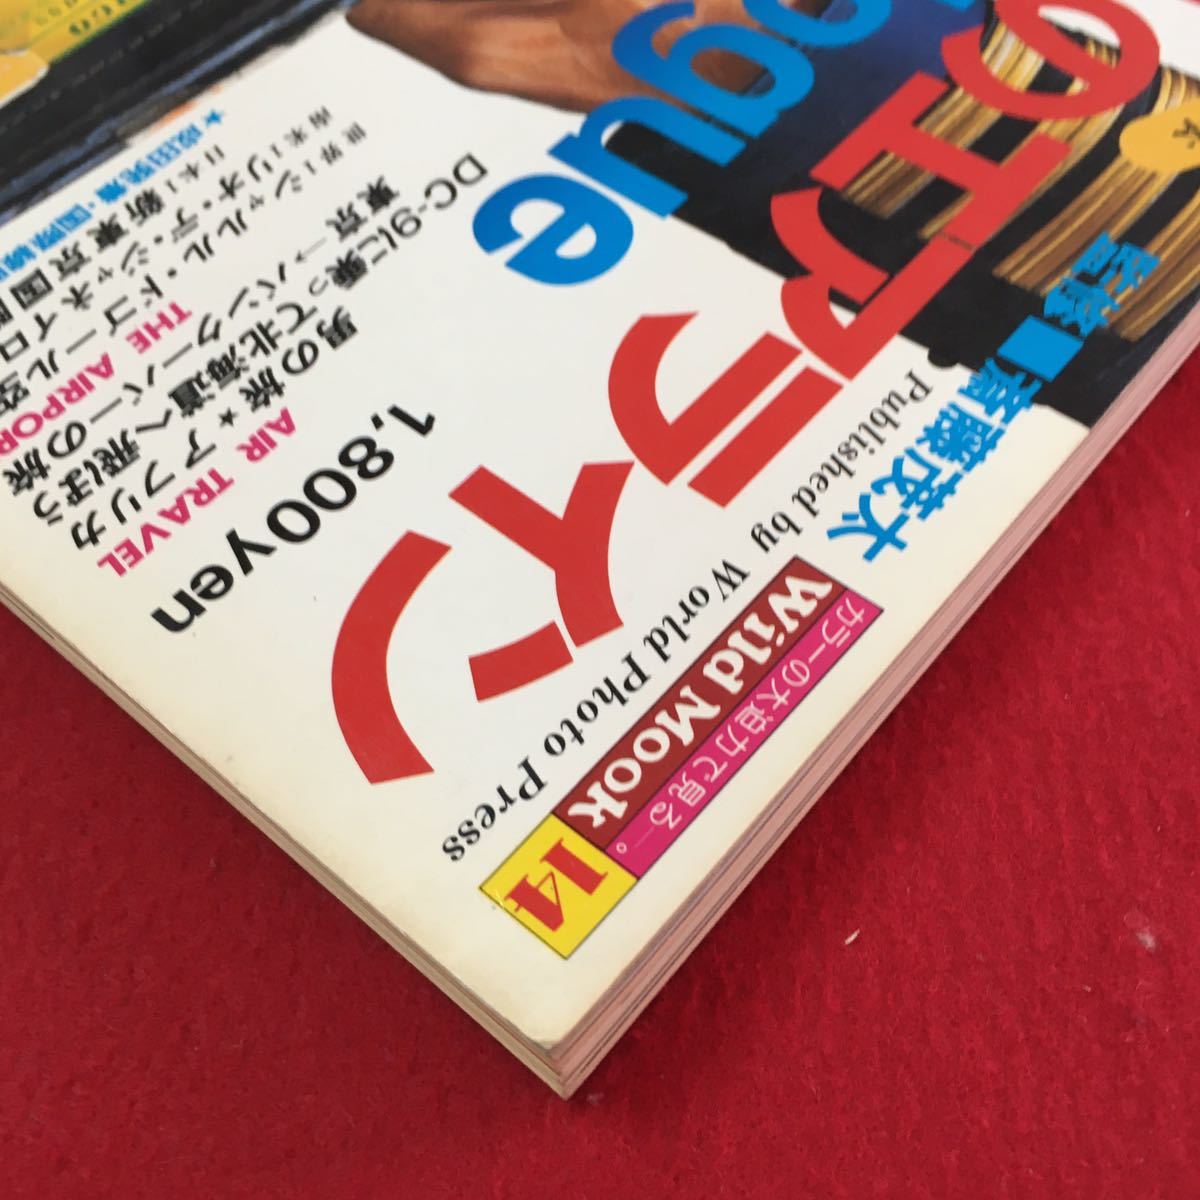 M5b-302 世界のエアライン Catalogue 3 東京→バンクーバーの旅 シャルル・ドゴール空港 昭和53年5月20日発行_画像3